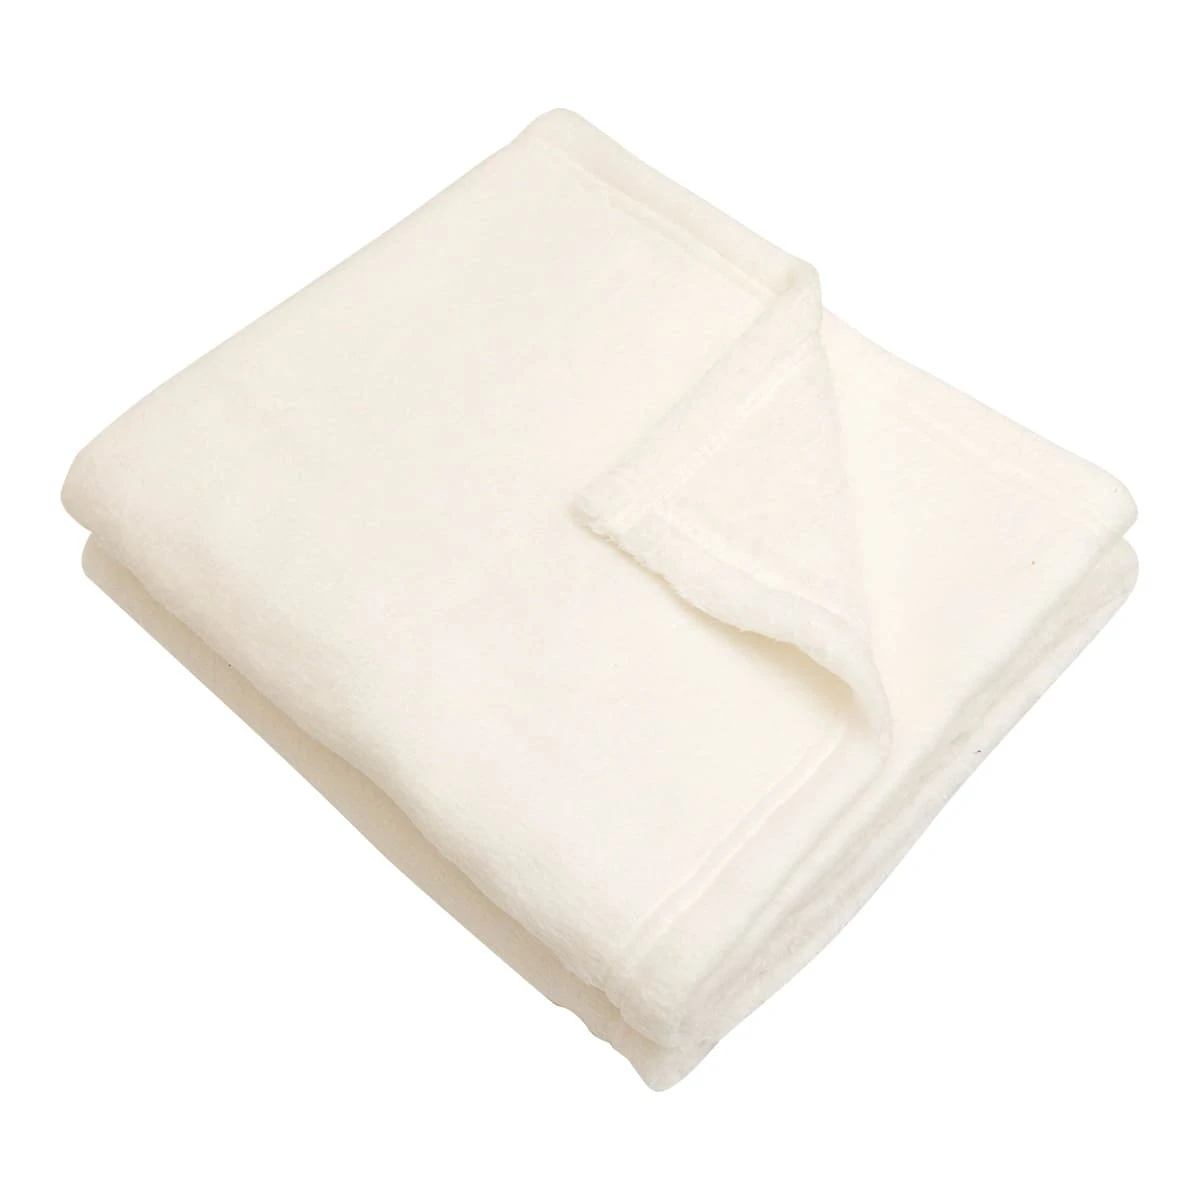 Rivo Embroidery Plush Hand Warmer Pillow Blanket (White)